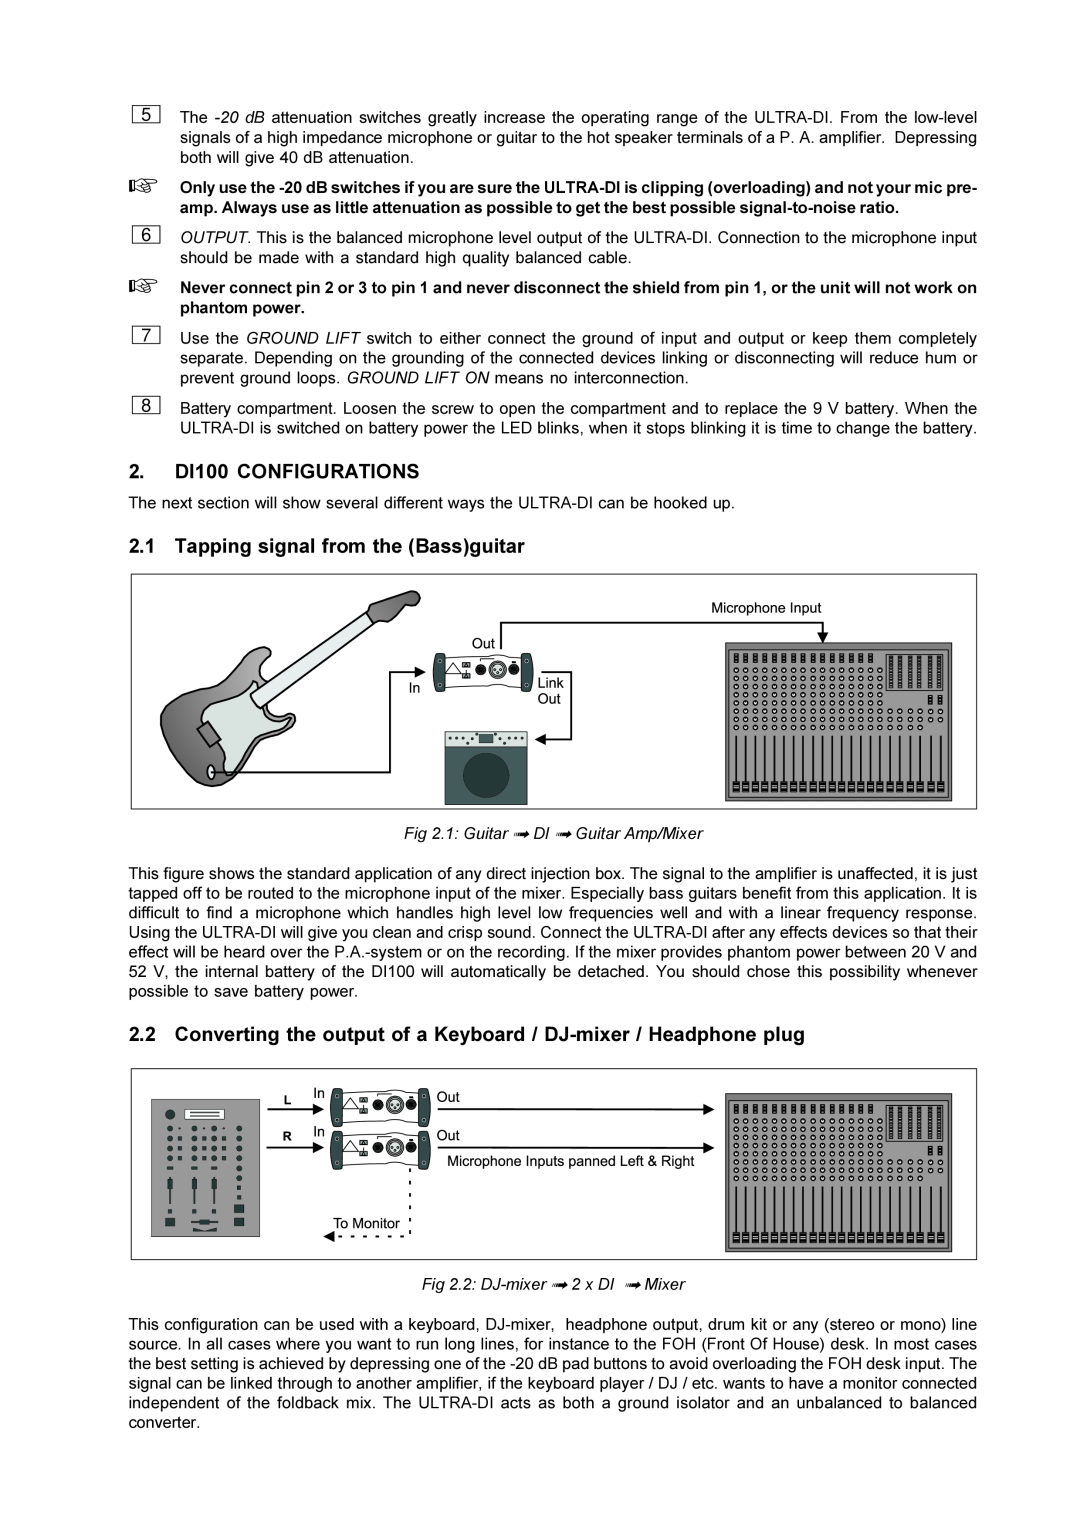 Behringer ULTRA-DI DI100 2.DI100 CONFIGURATIONS, Tapping signal from the Bassguitar, 1 Guitar ß DI ß Guitar Amp/Mixer 